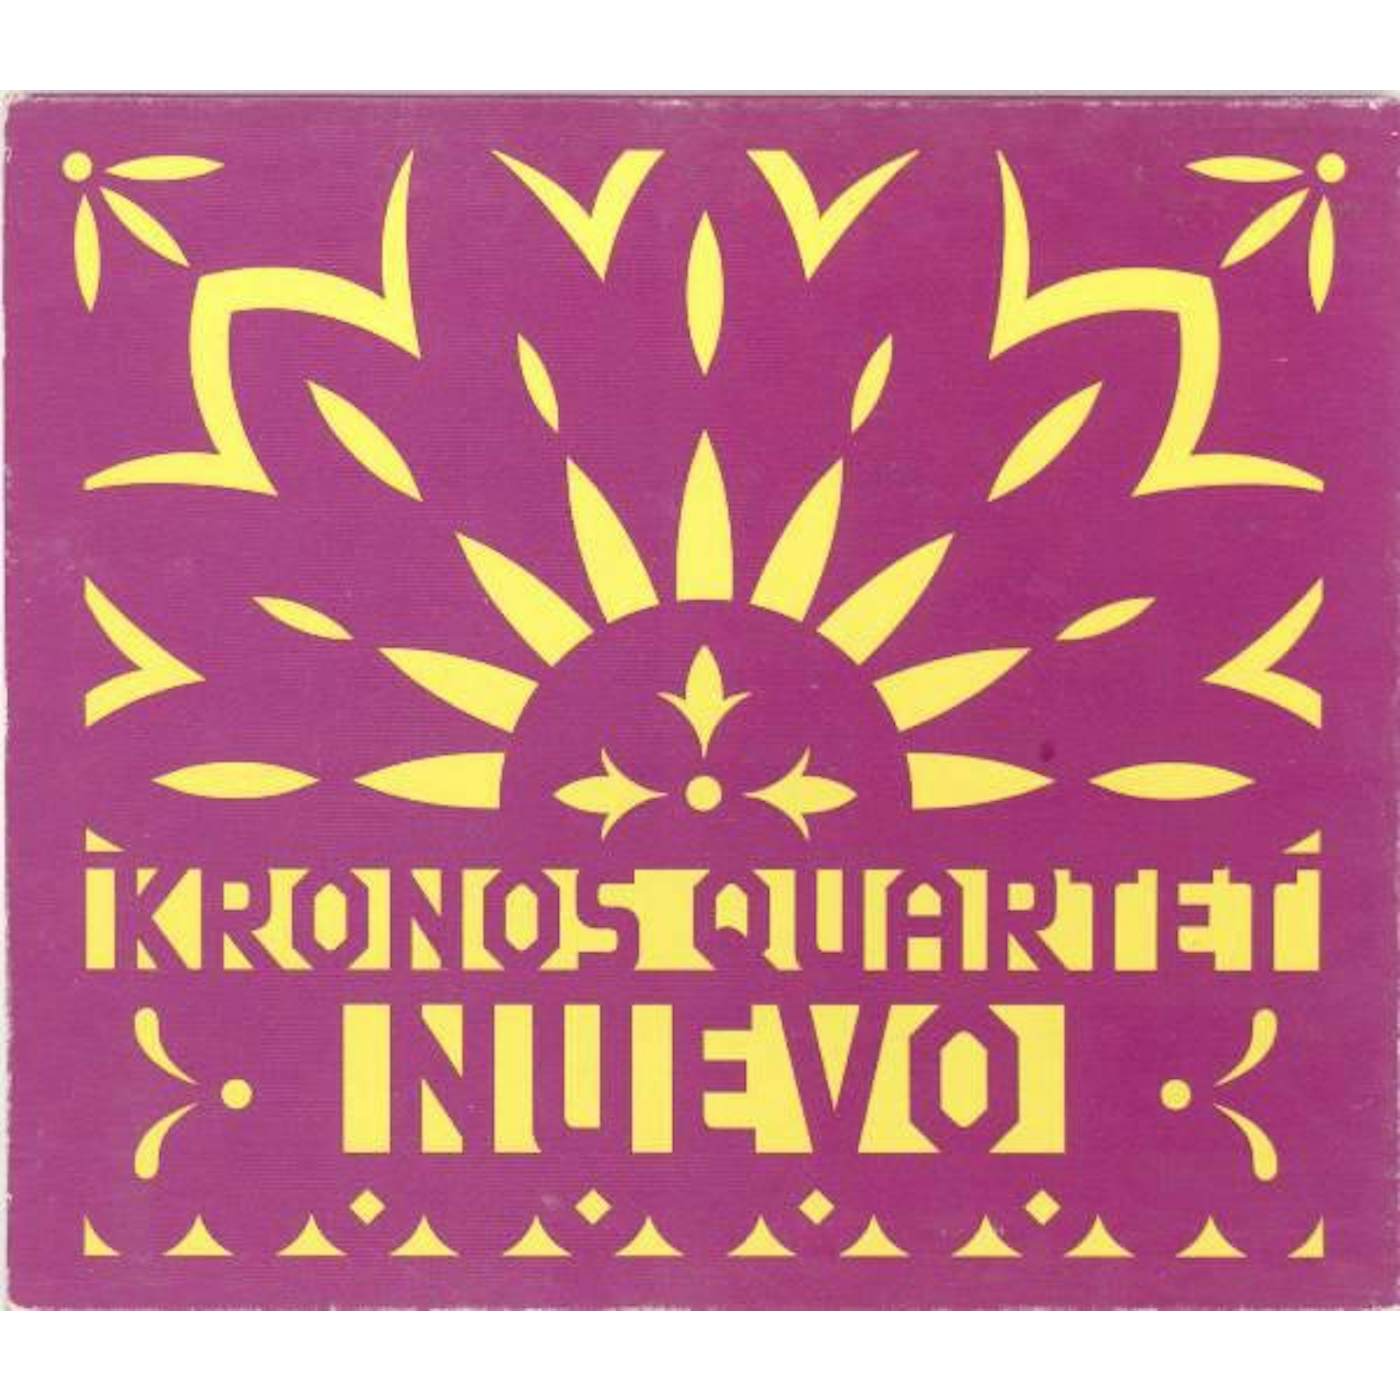 Kronos Quartet NUEVO CD